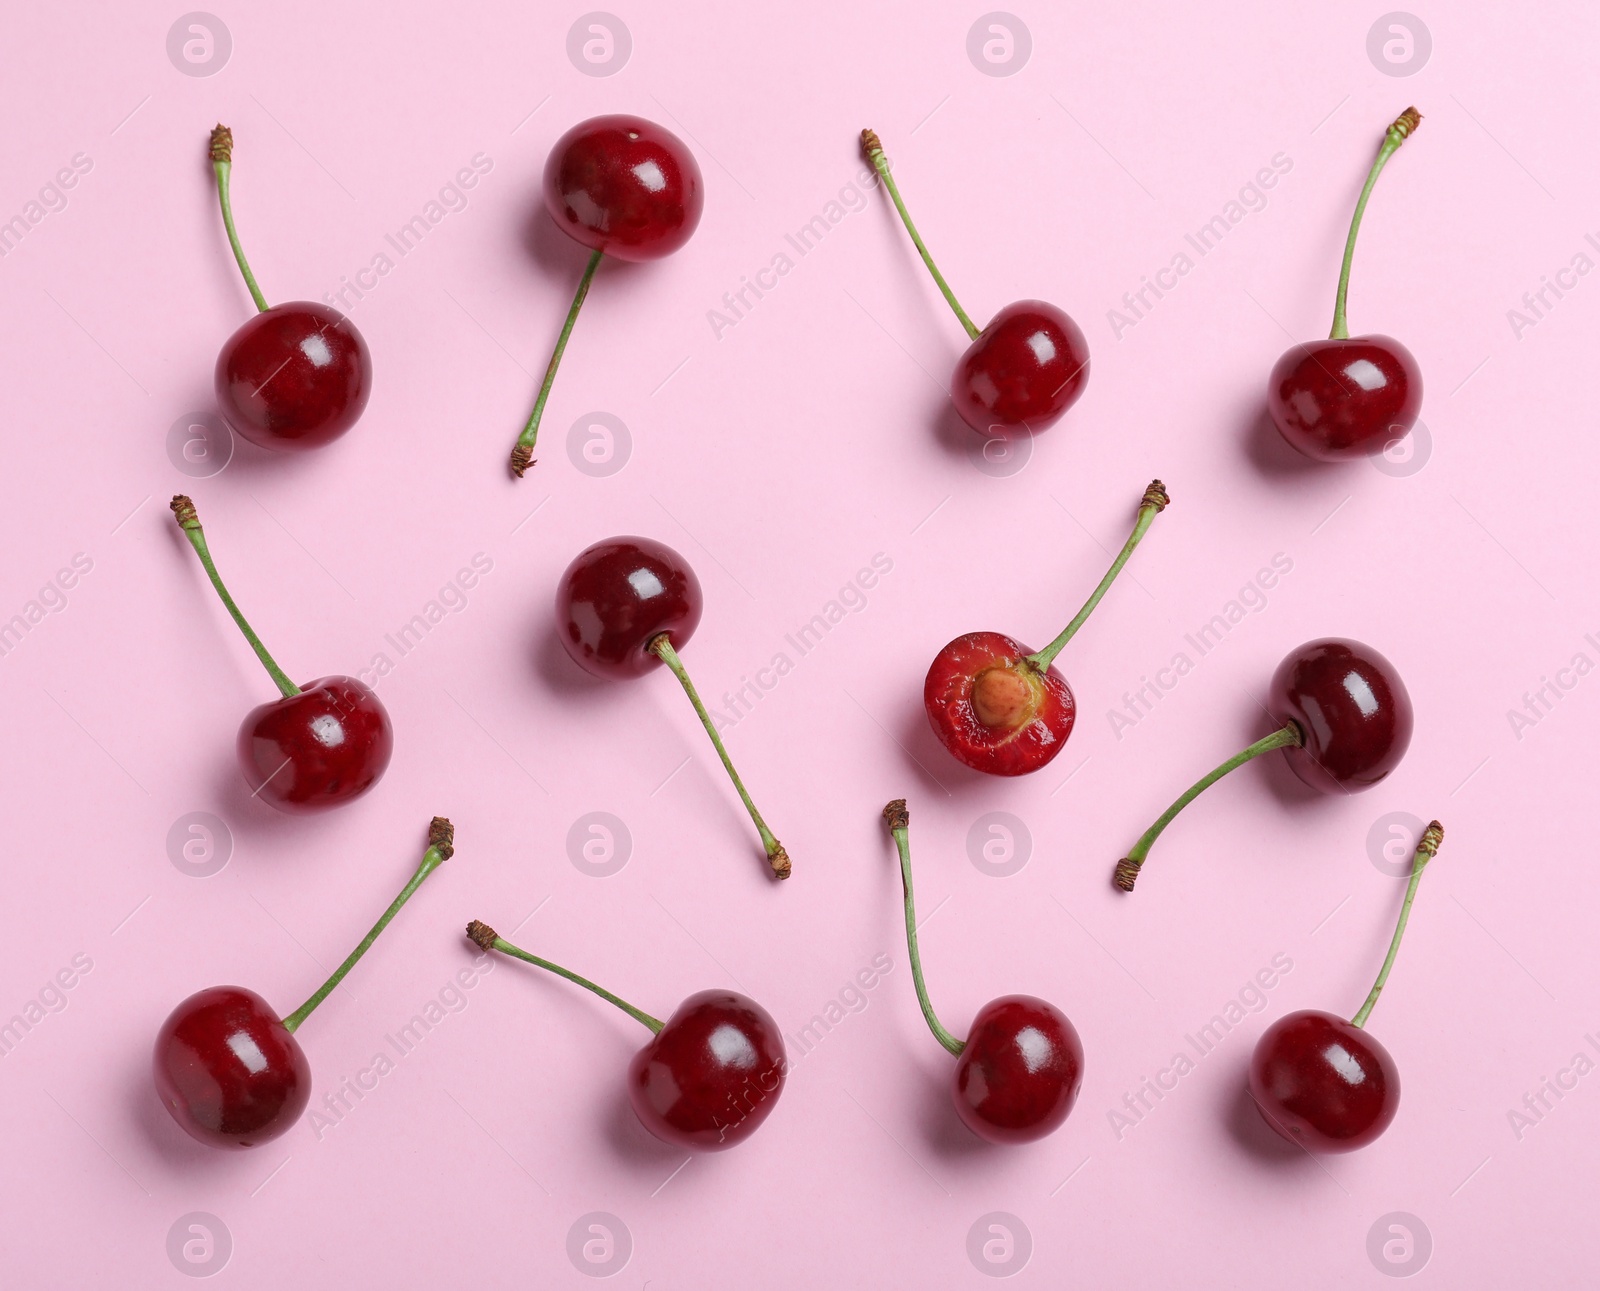 Photo of Sweet juicy cherries on pink background, flat lay